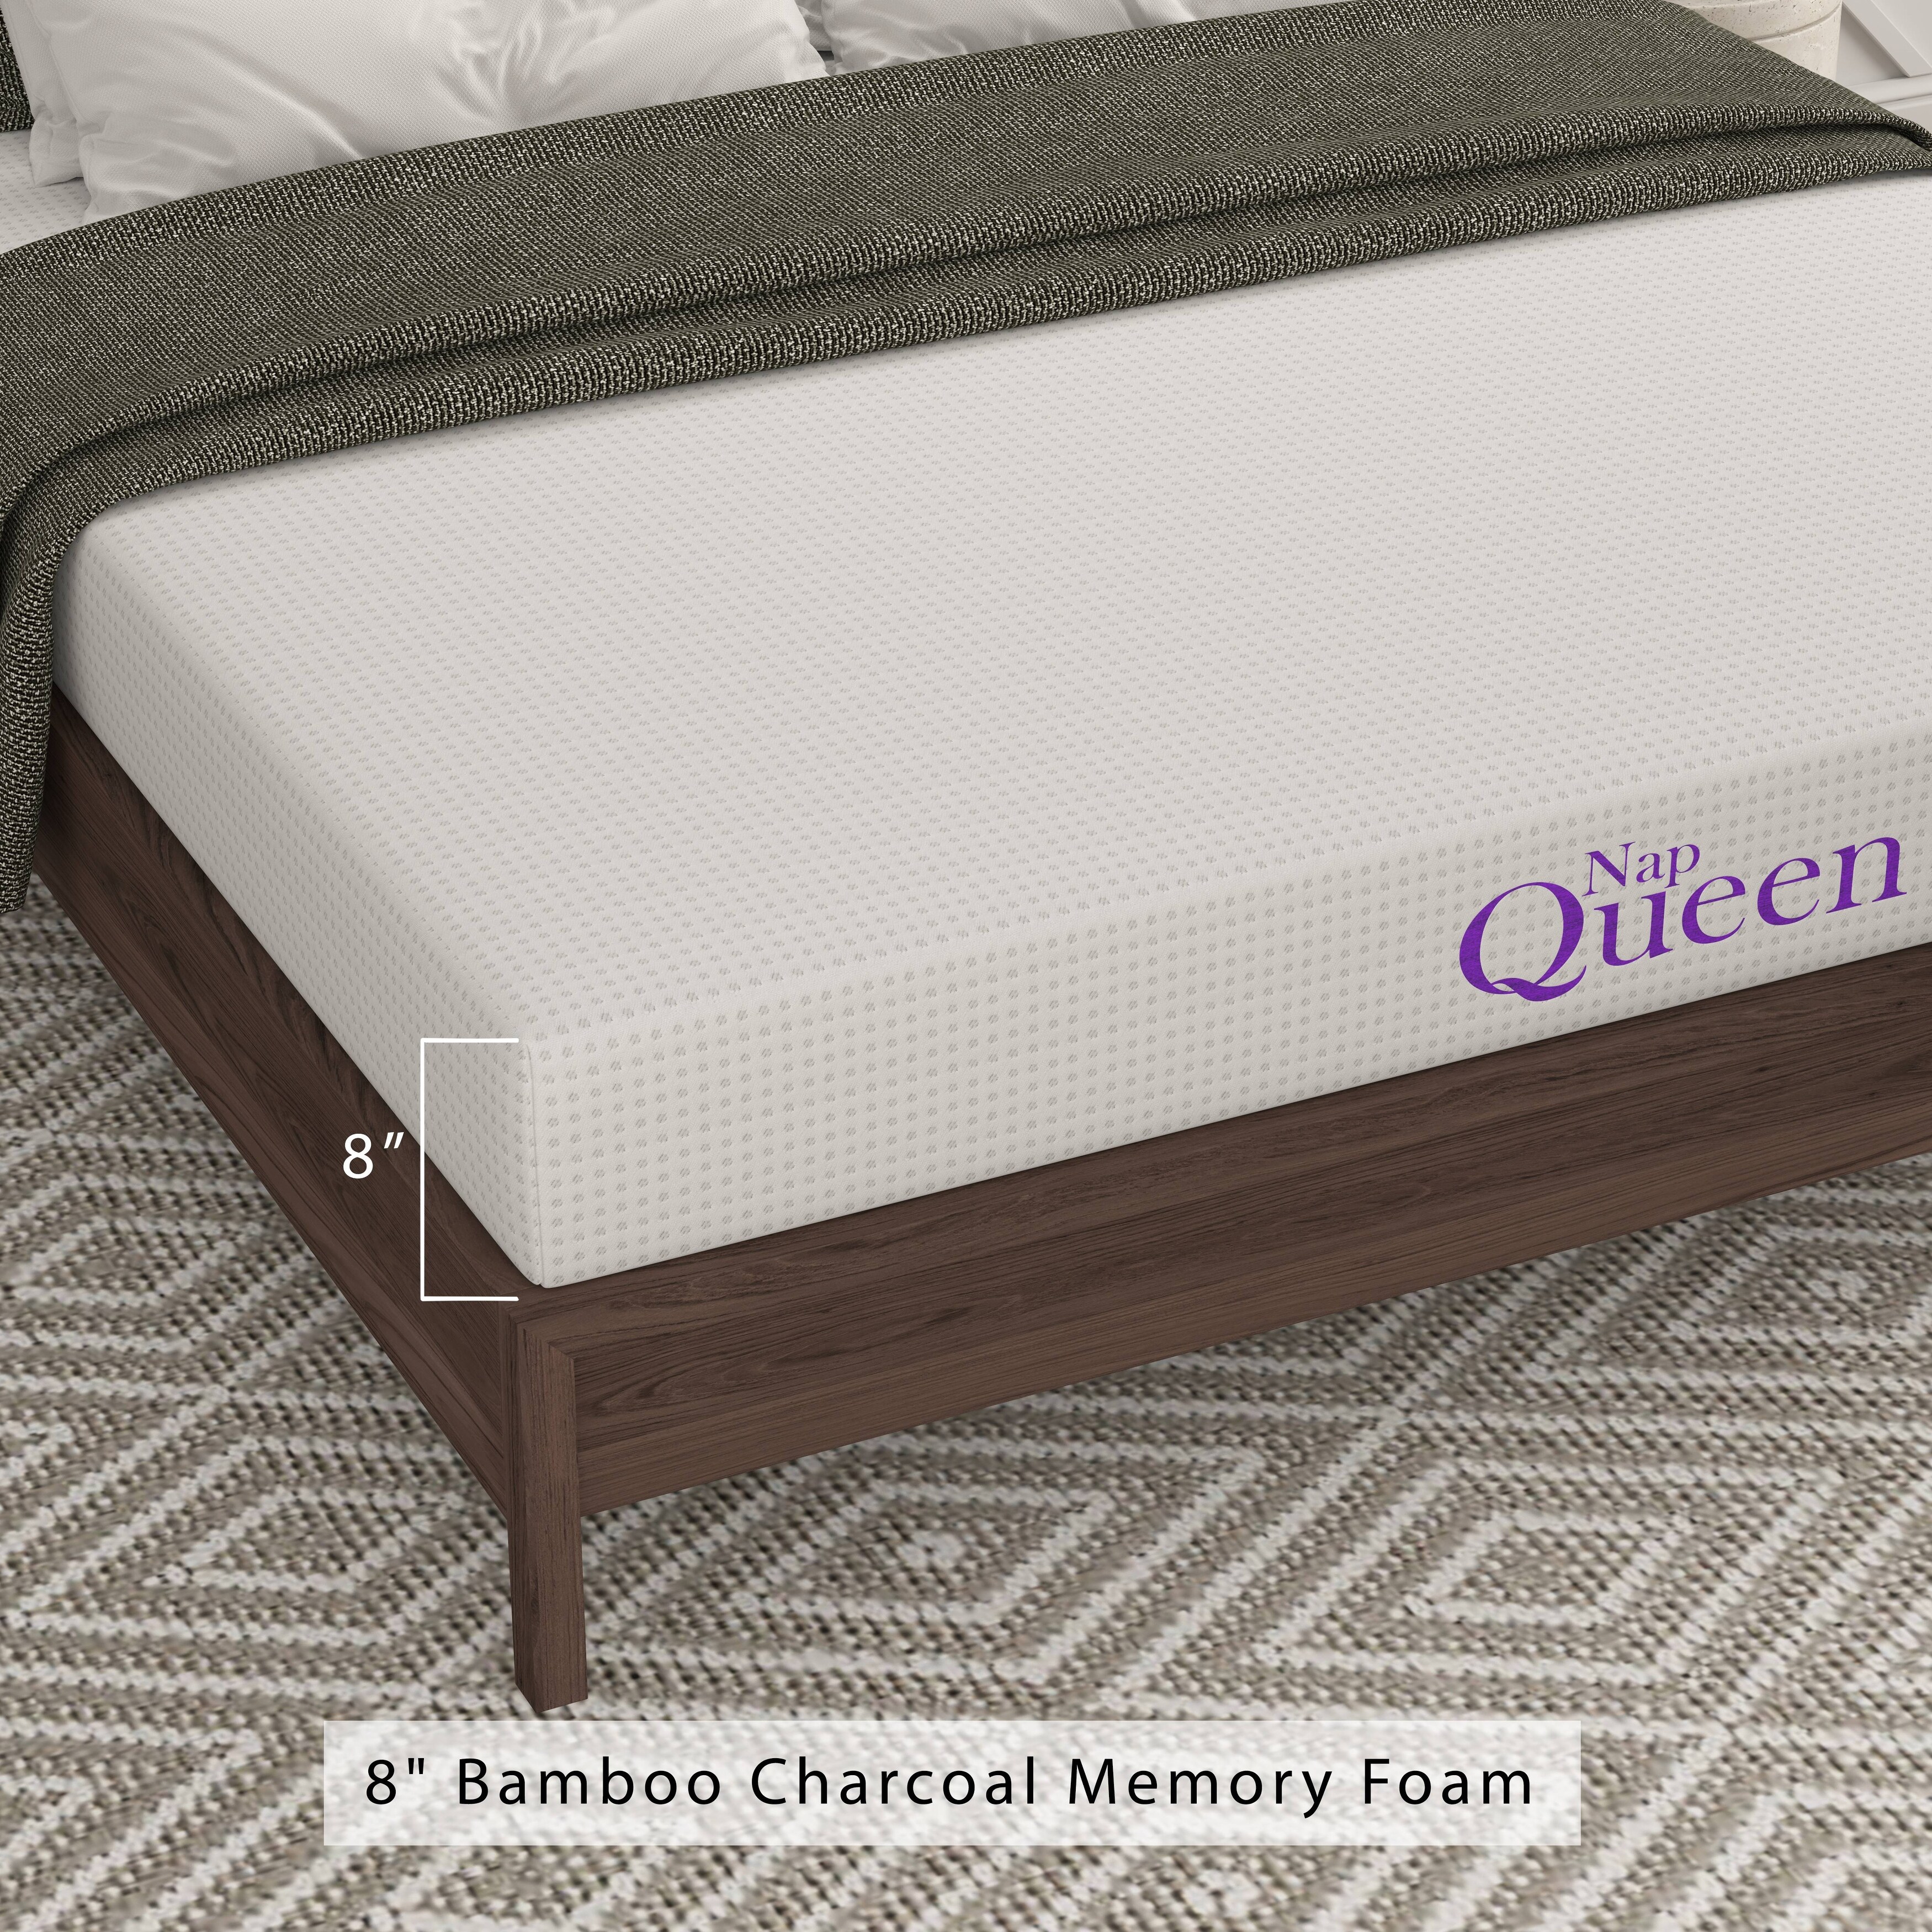 Medium Firm Queen NapQueen Bamboo Charcoal Memory Foam Mattress in a Box 8 inch